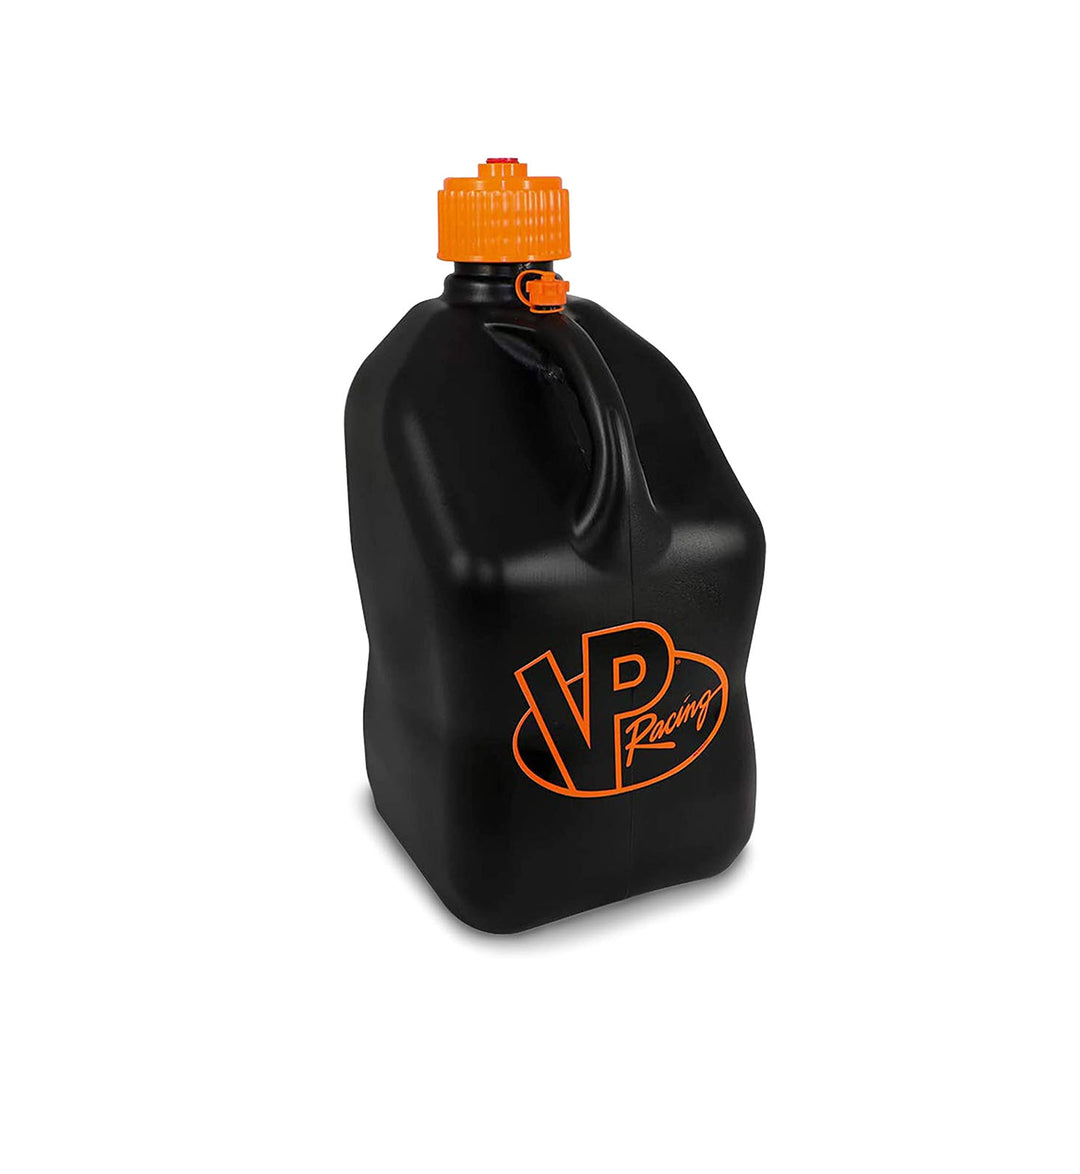 VP Racing 5.5-Gallon Motorsport Container - Black Jug, Orange Cap - Dirty Racing Products